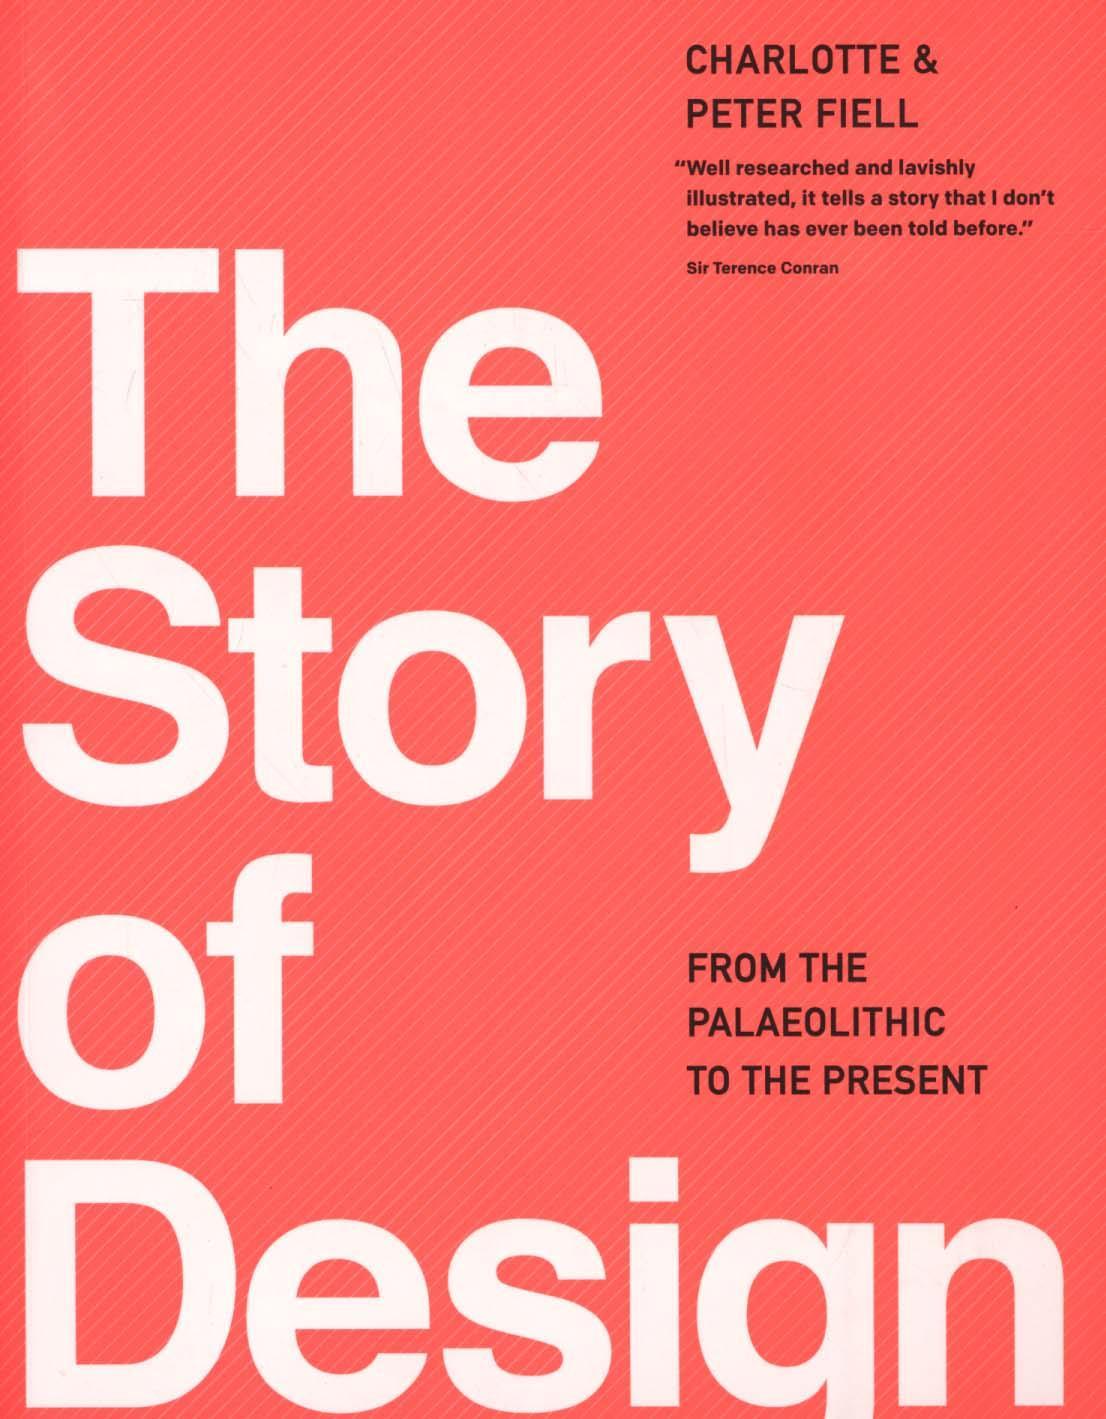 Story of Design